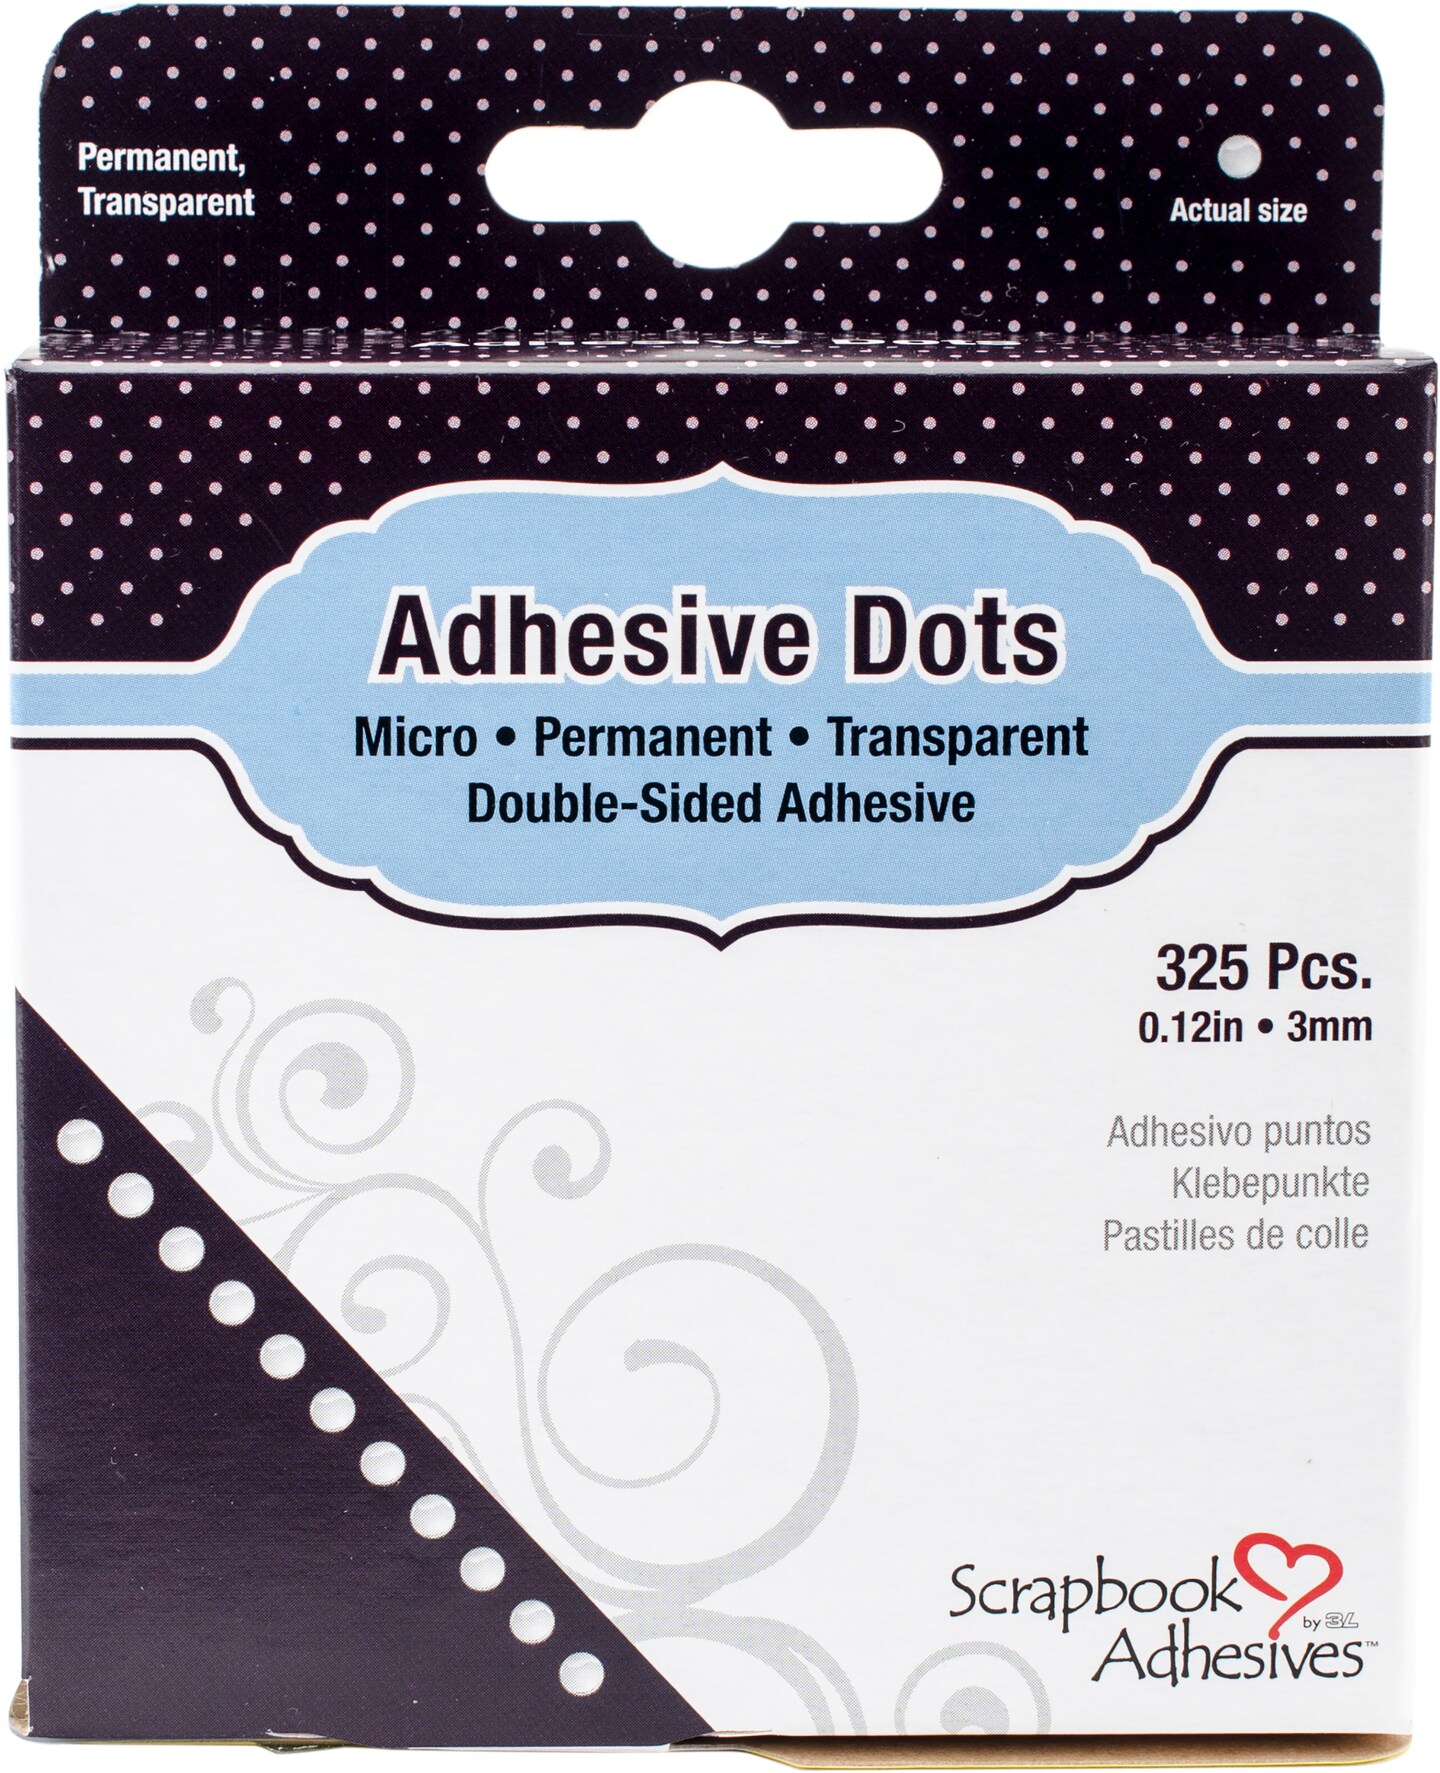 SCRAPBOOK ADHESIVES Permanent Adhesive Dots Roll: Micro (325 pc.) -  Scrapbook Generation